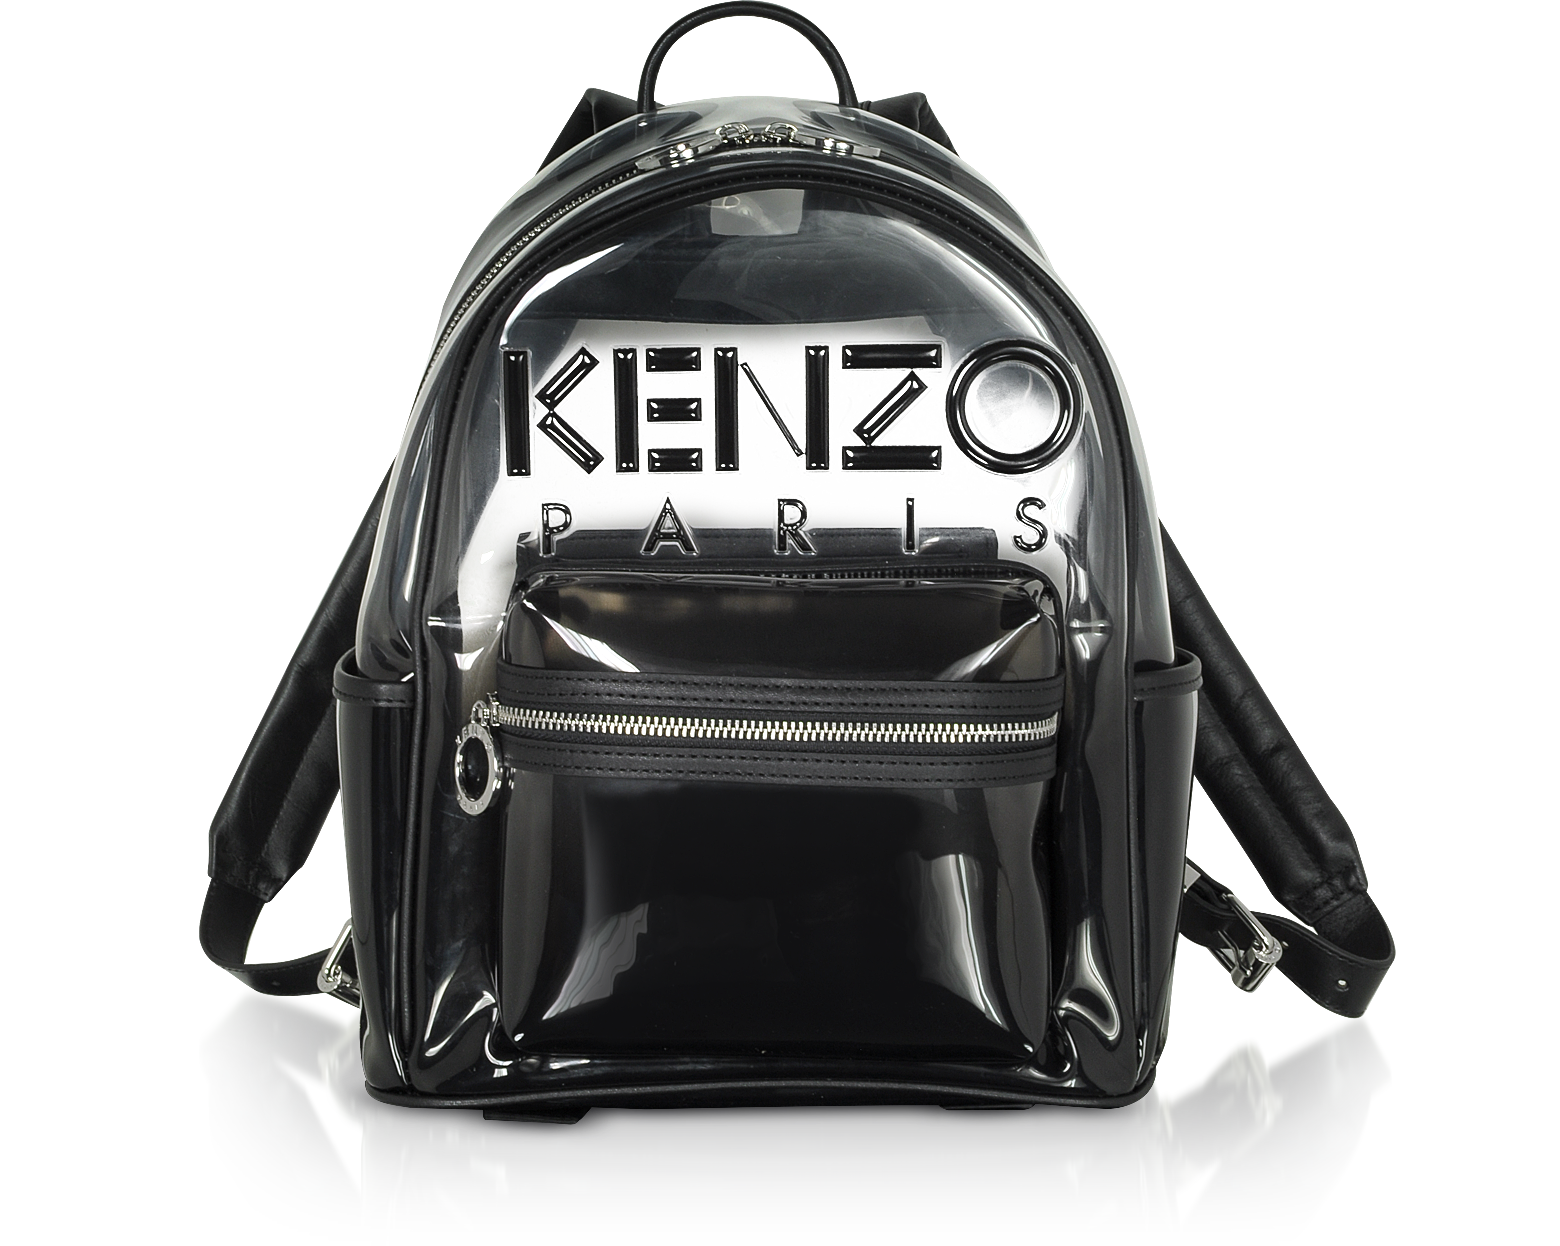 backpack kenzo